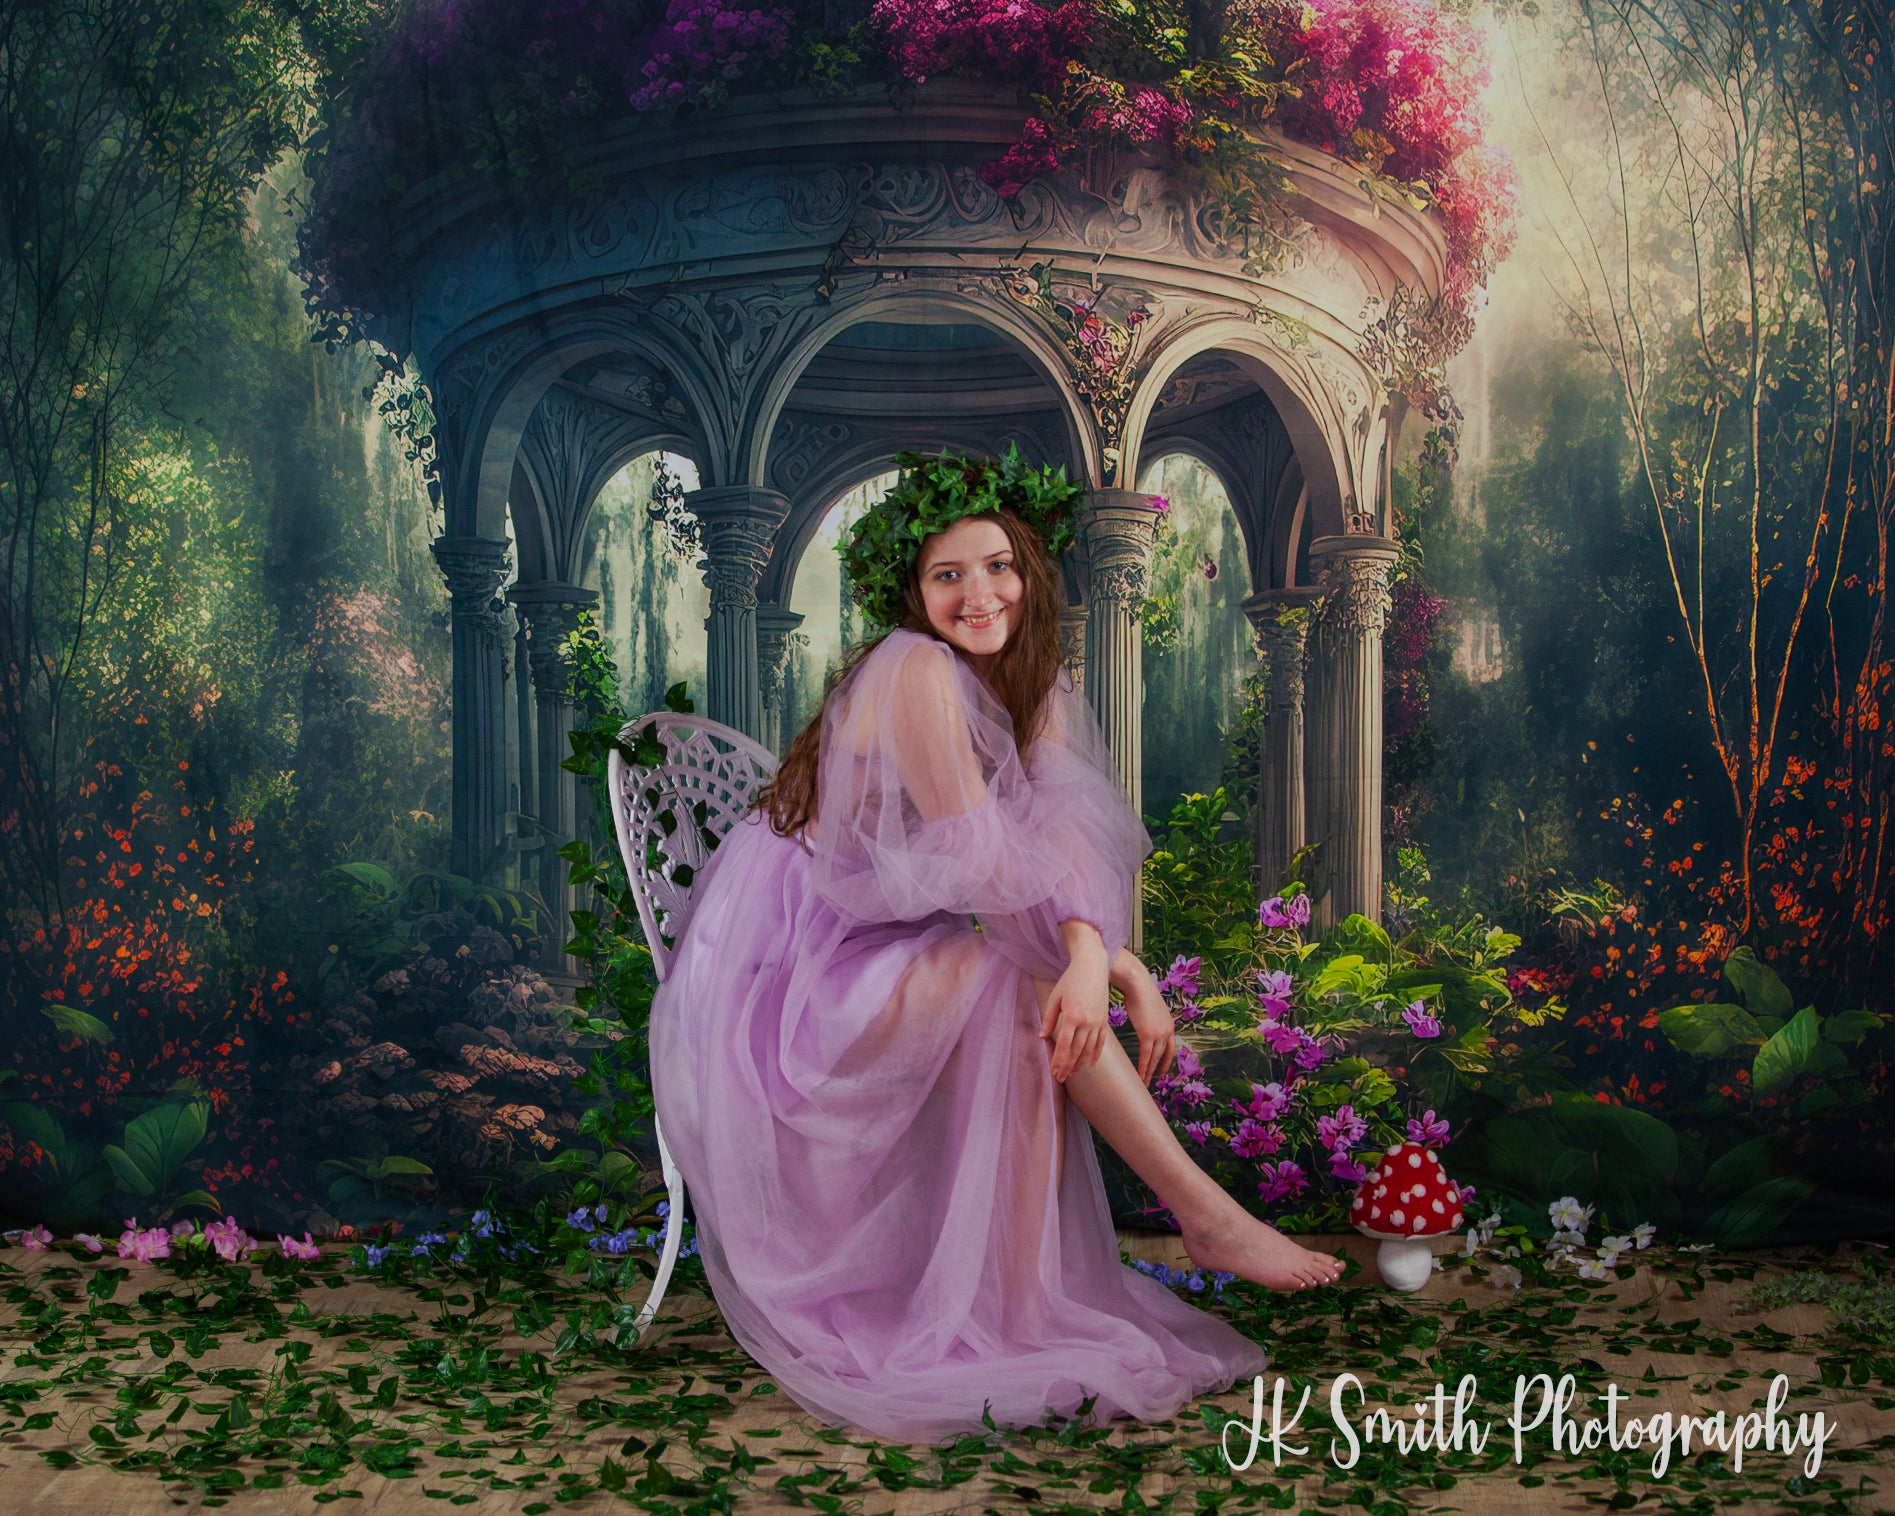 Kate Enchanted Gazebo Spring Fantasy Flower Garden Backdrop Designed by Candice Compton